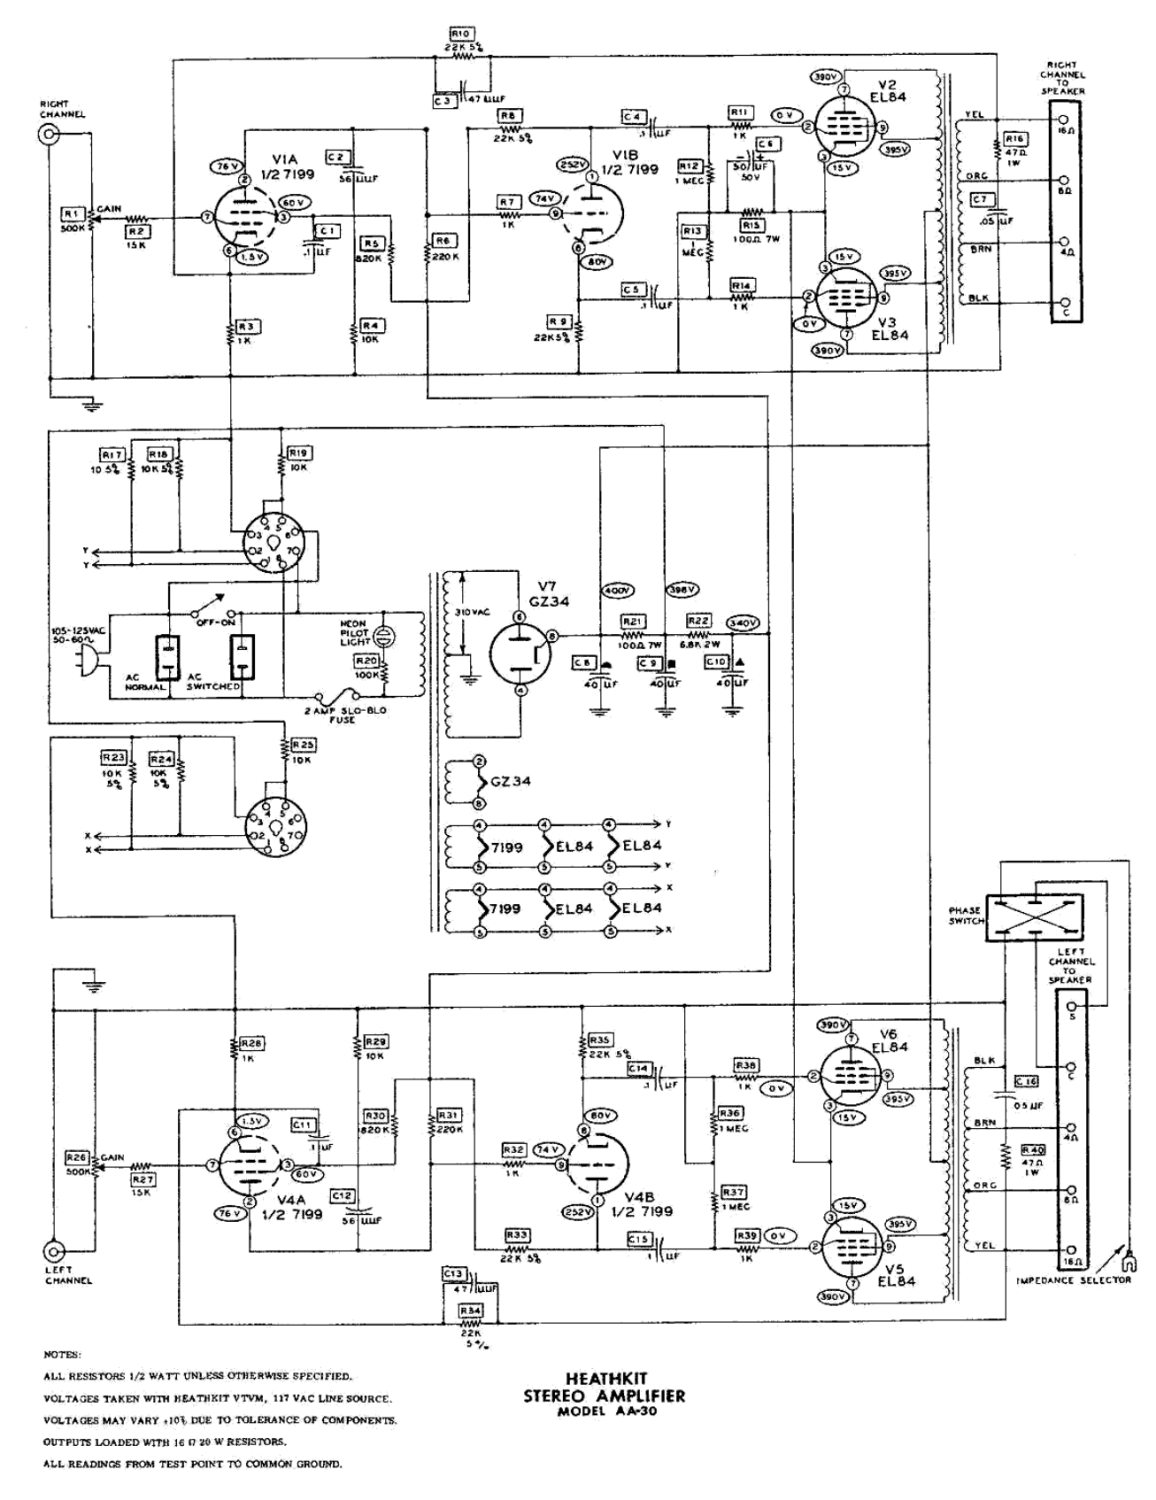 Heathkit AA-30 Stereo Amplifier - Schematic Diagrams